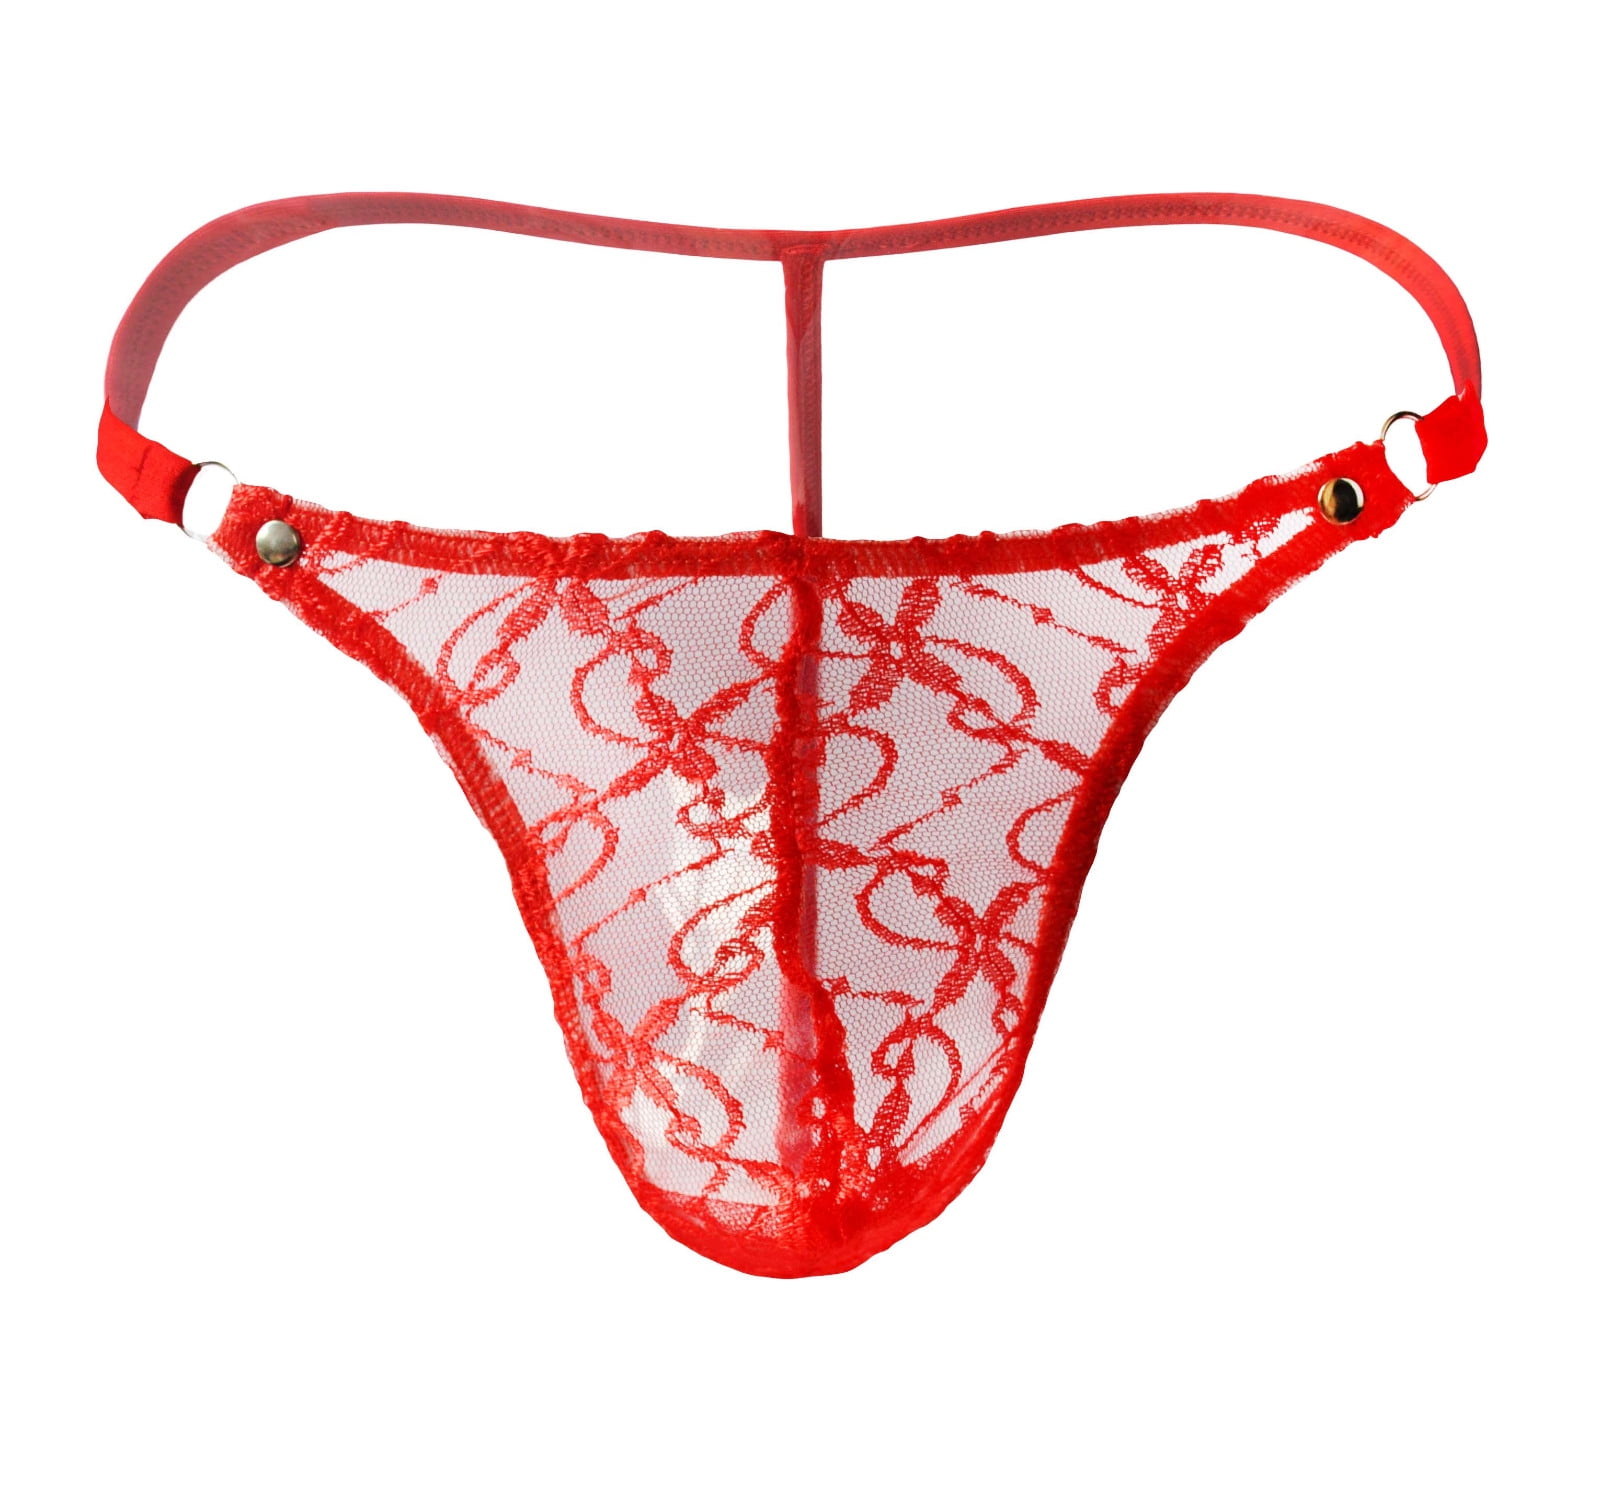 MRULIC intimates for women Women's Panties G Strings Thongs CString Women  Panties Lace Underwear BK Black + One size 